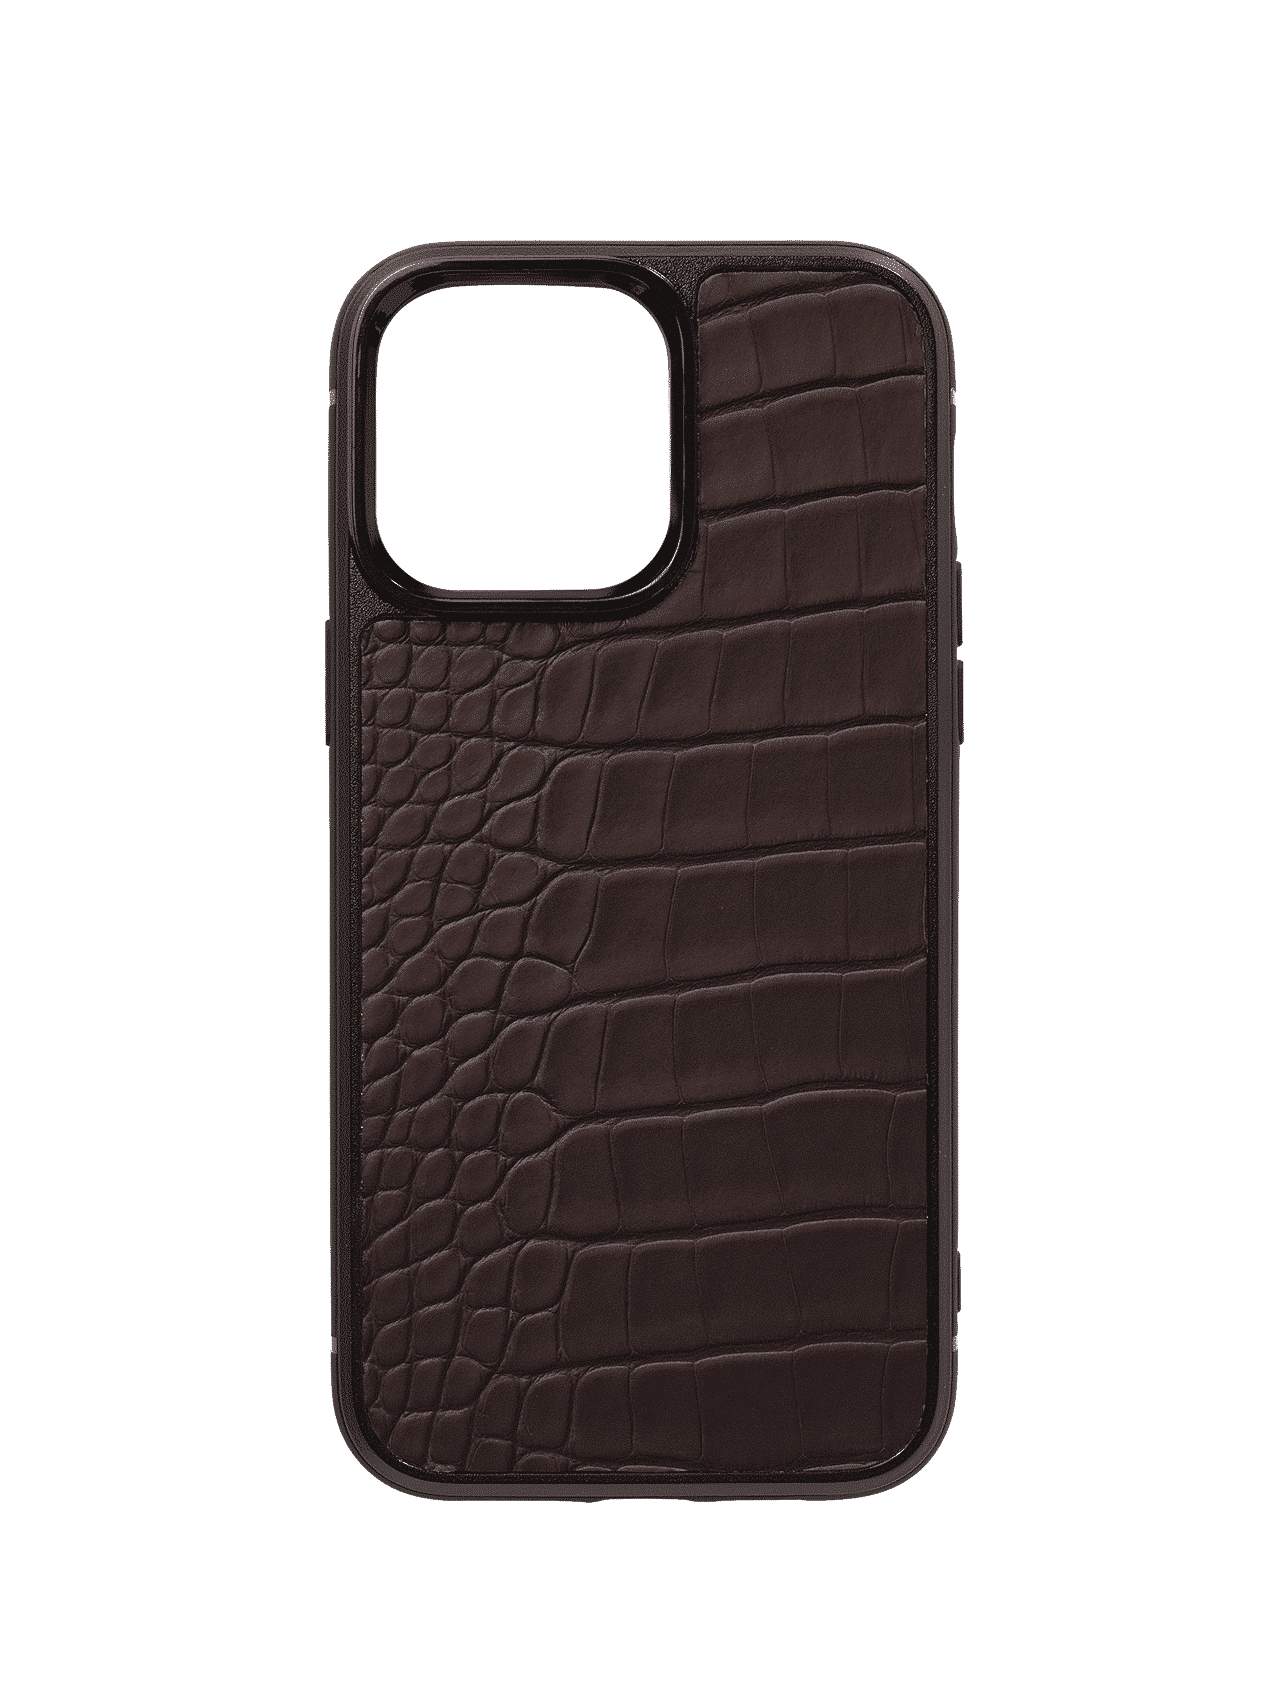 GUCCI LOGO FABRIC iPhone 14 Pro Max Case Cover